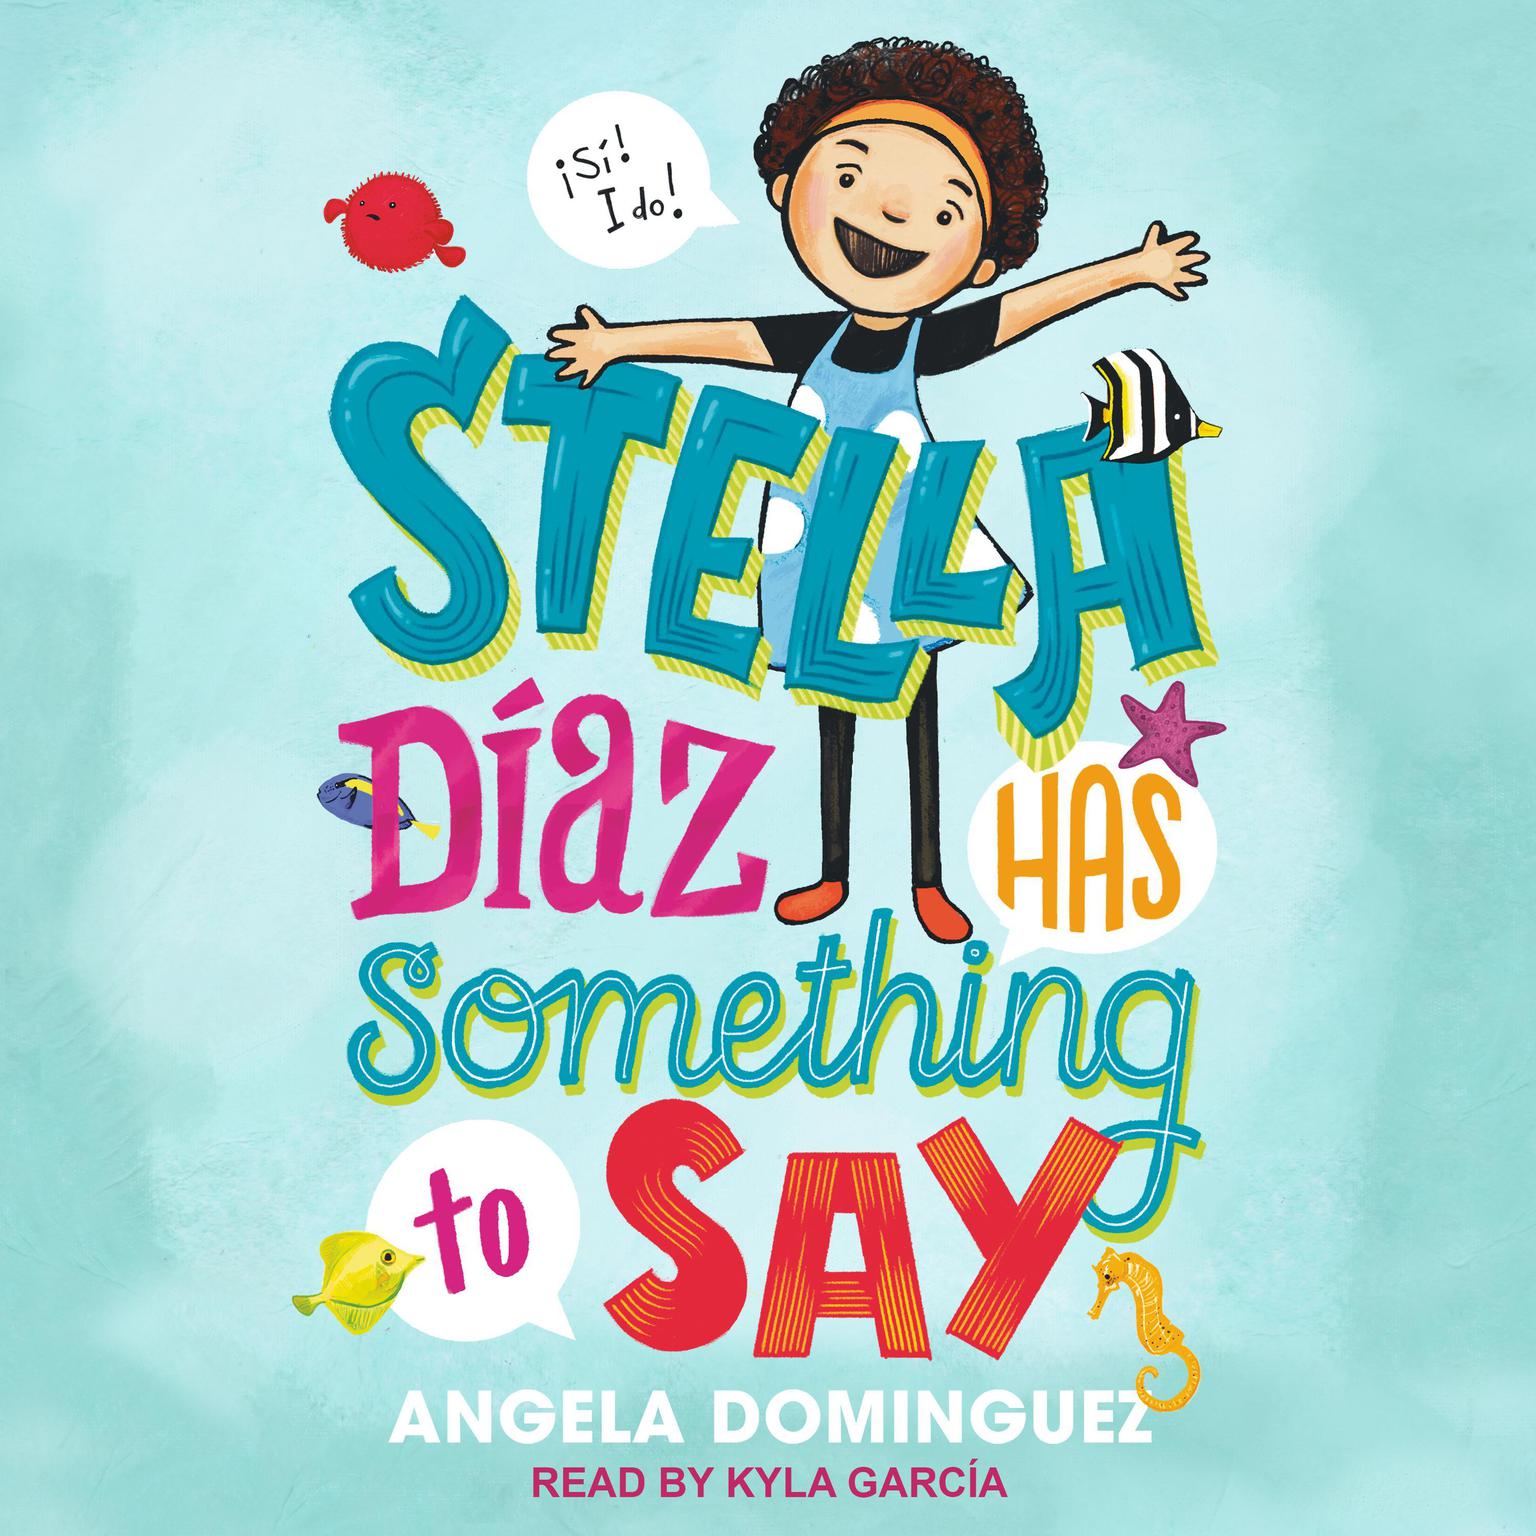 Stella Diaz Has Something to Say Audiobook, by Angela Dominguez